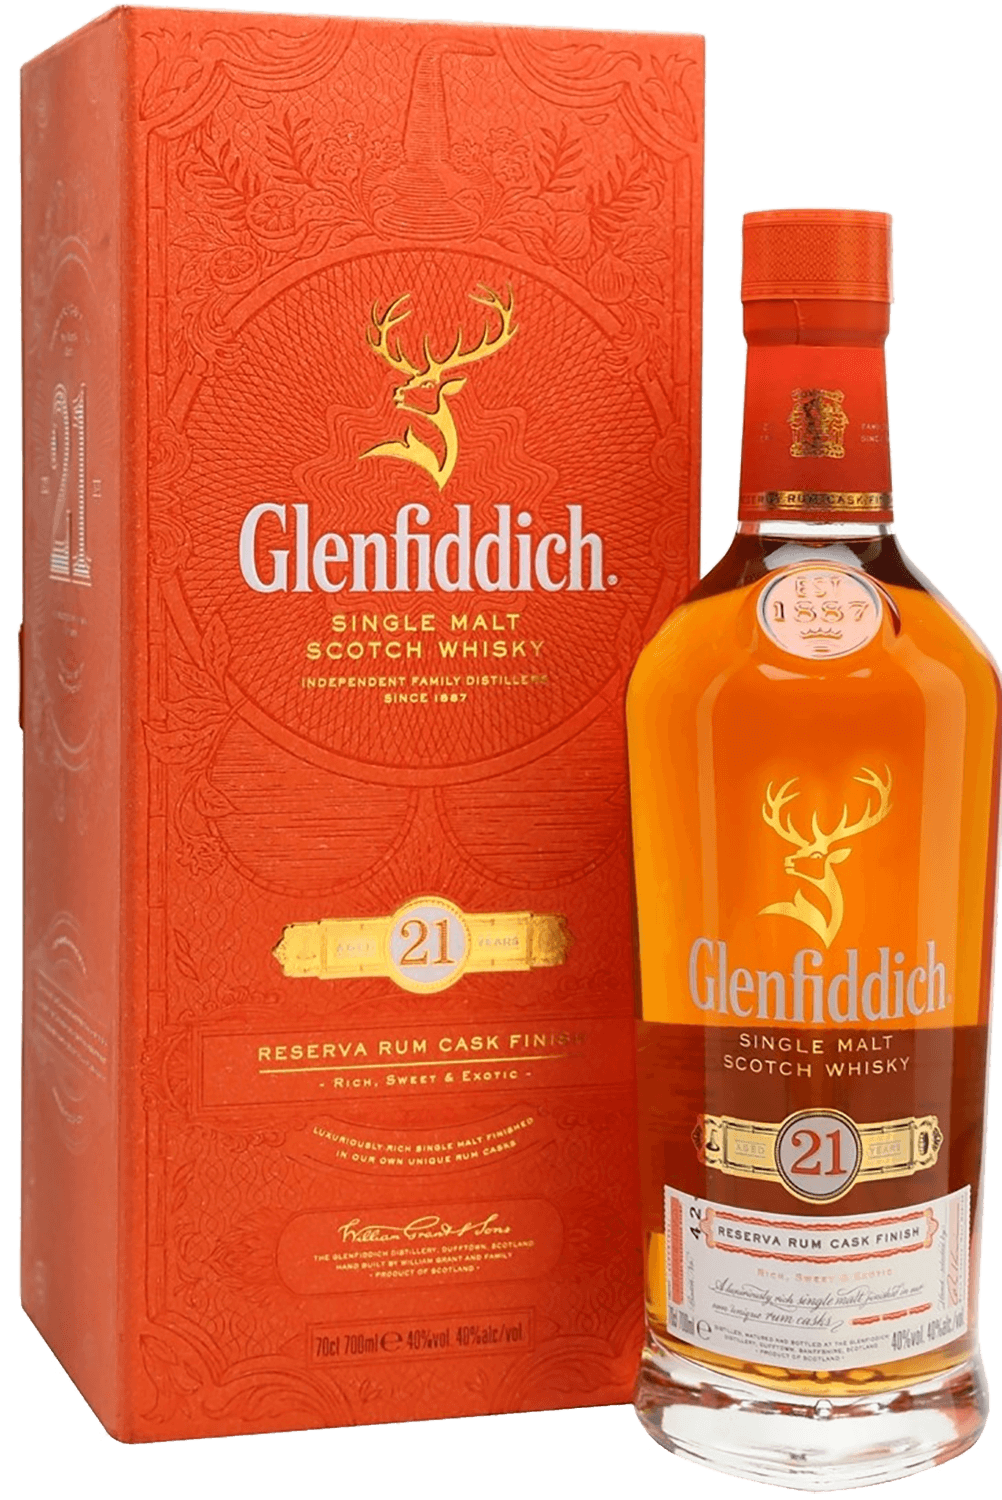 Glenfiddich Single Malt Scotch Whisky 21 yo (gift box) speymhor 21 y o single malt scotch whisky gift box